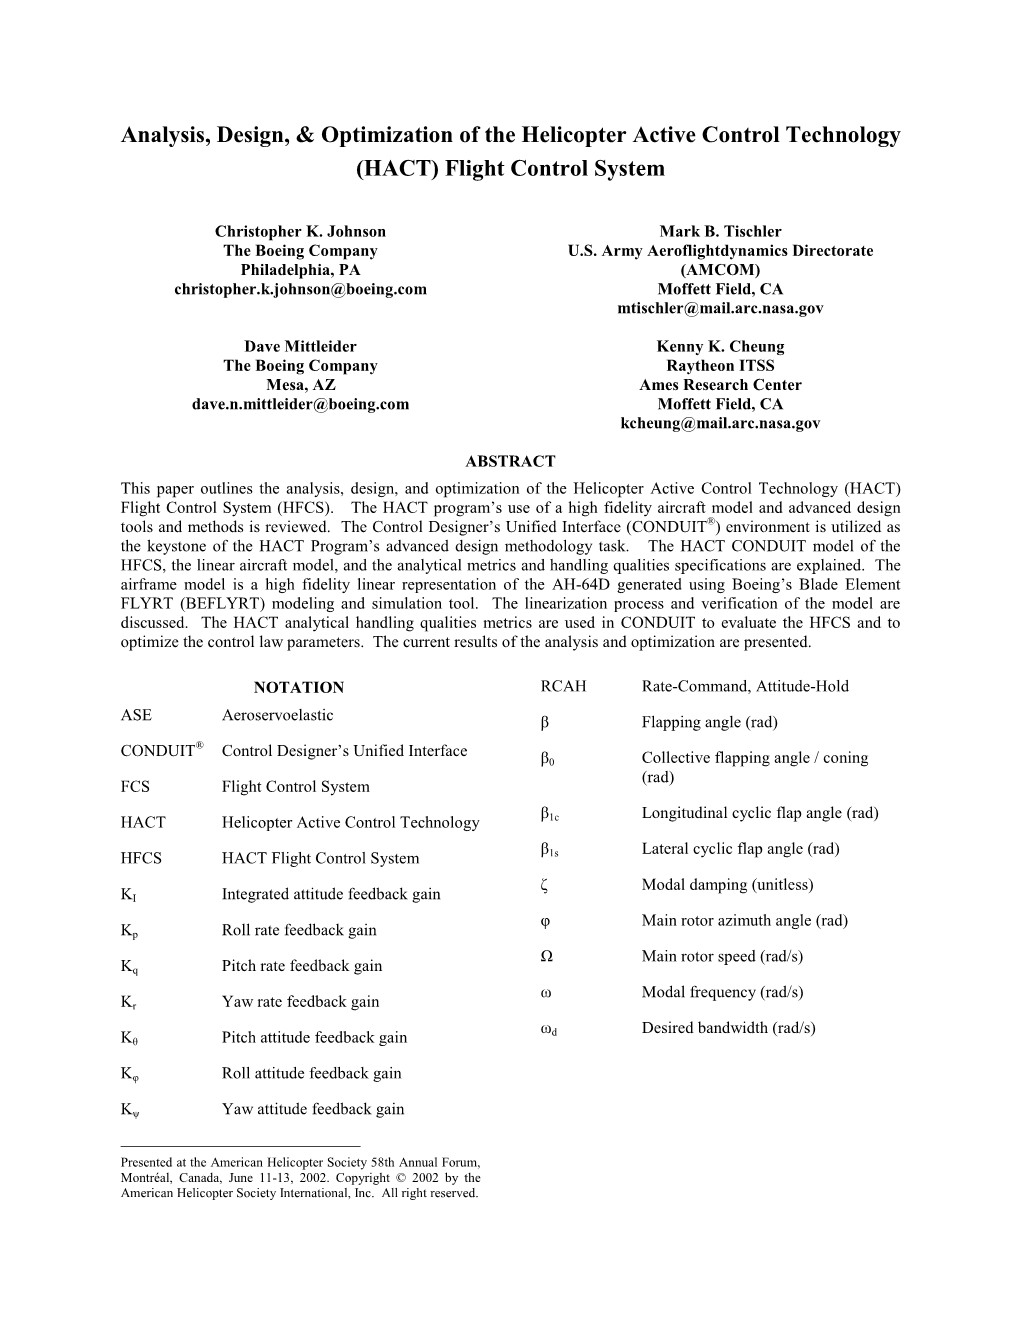 HACT) Flight Control System